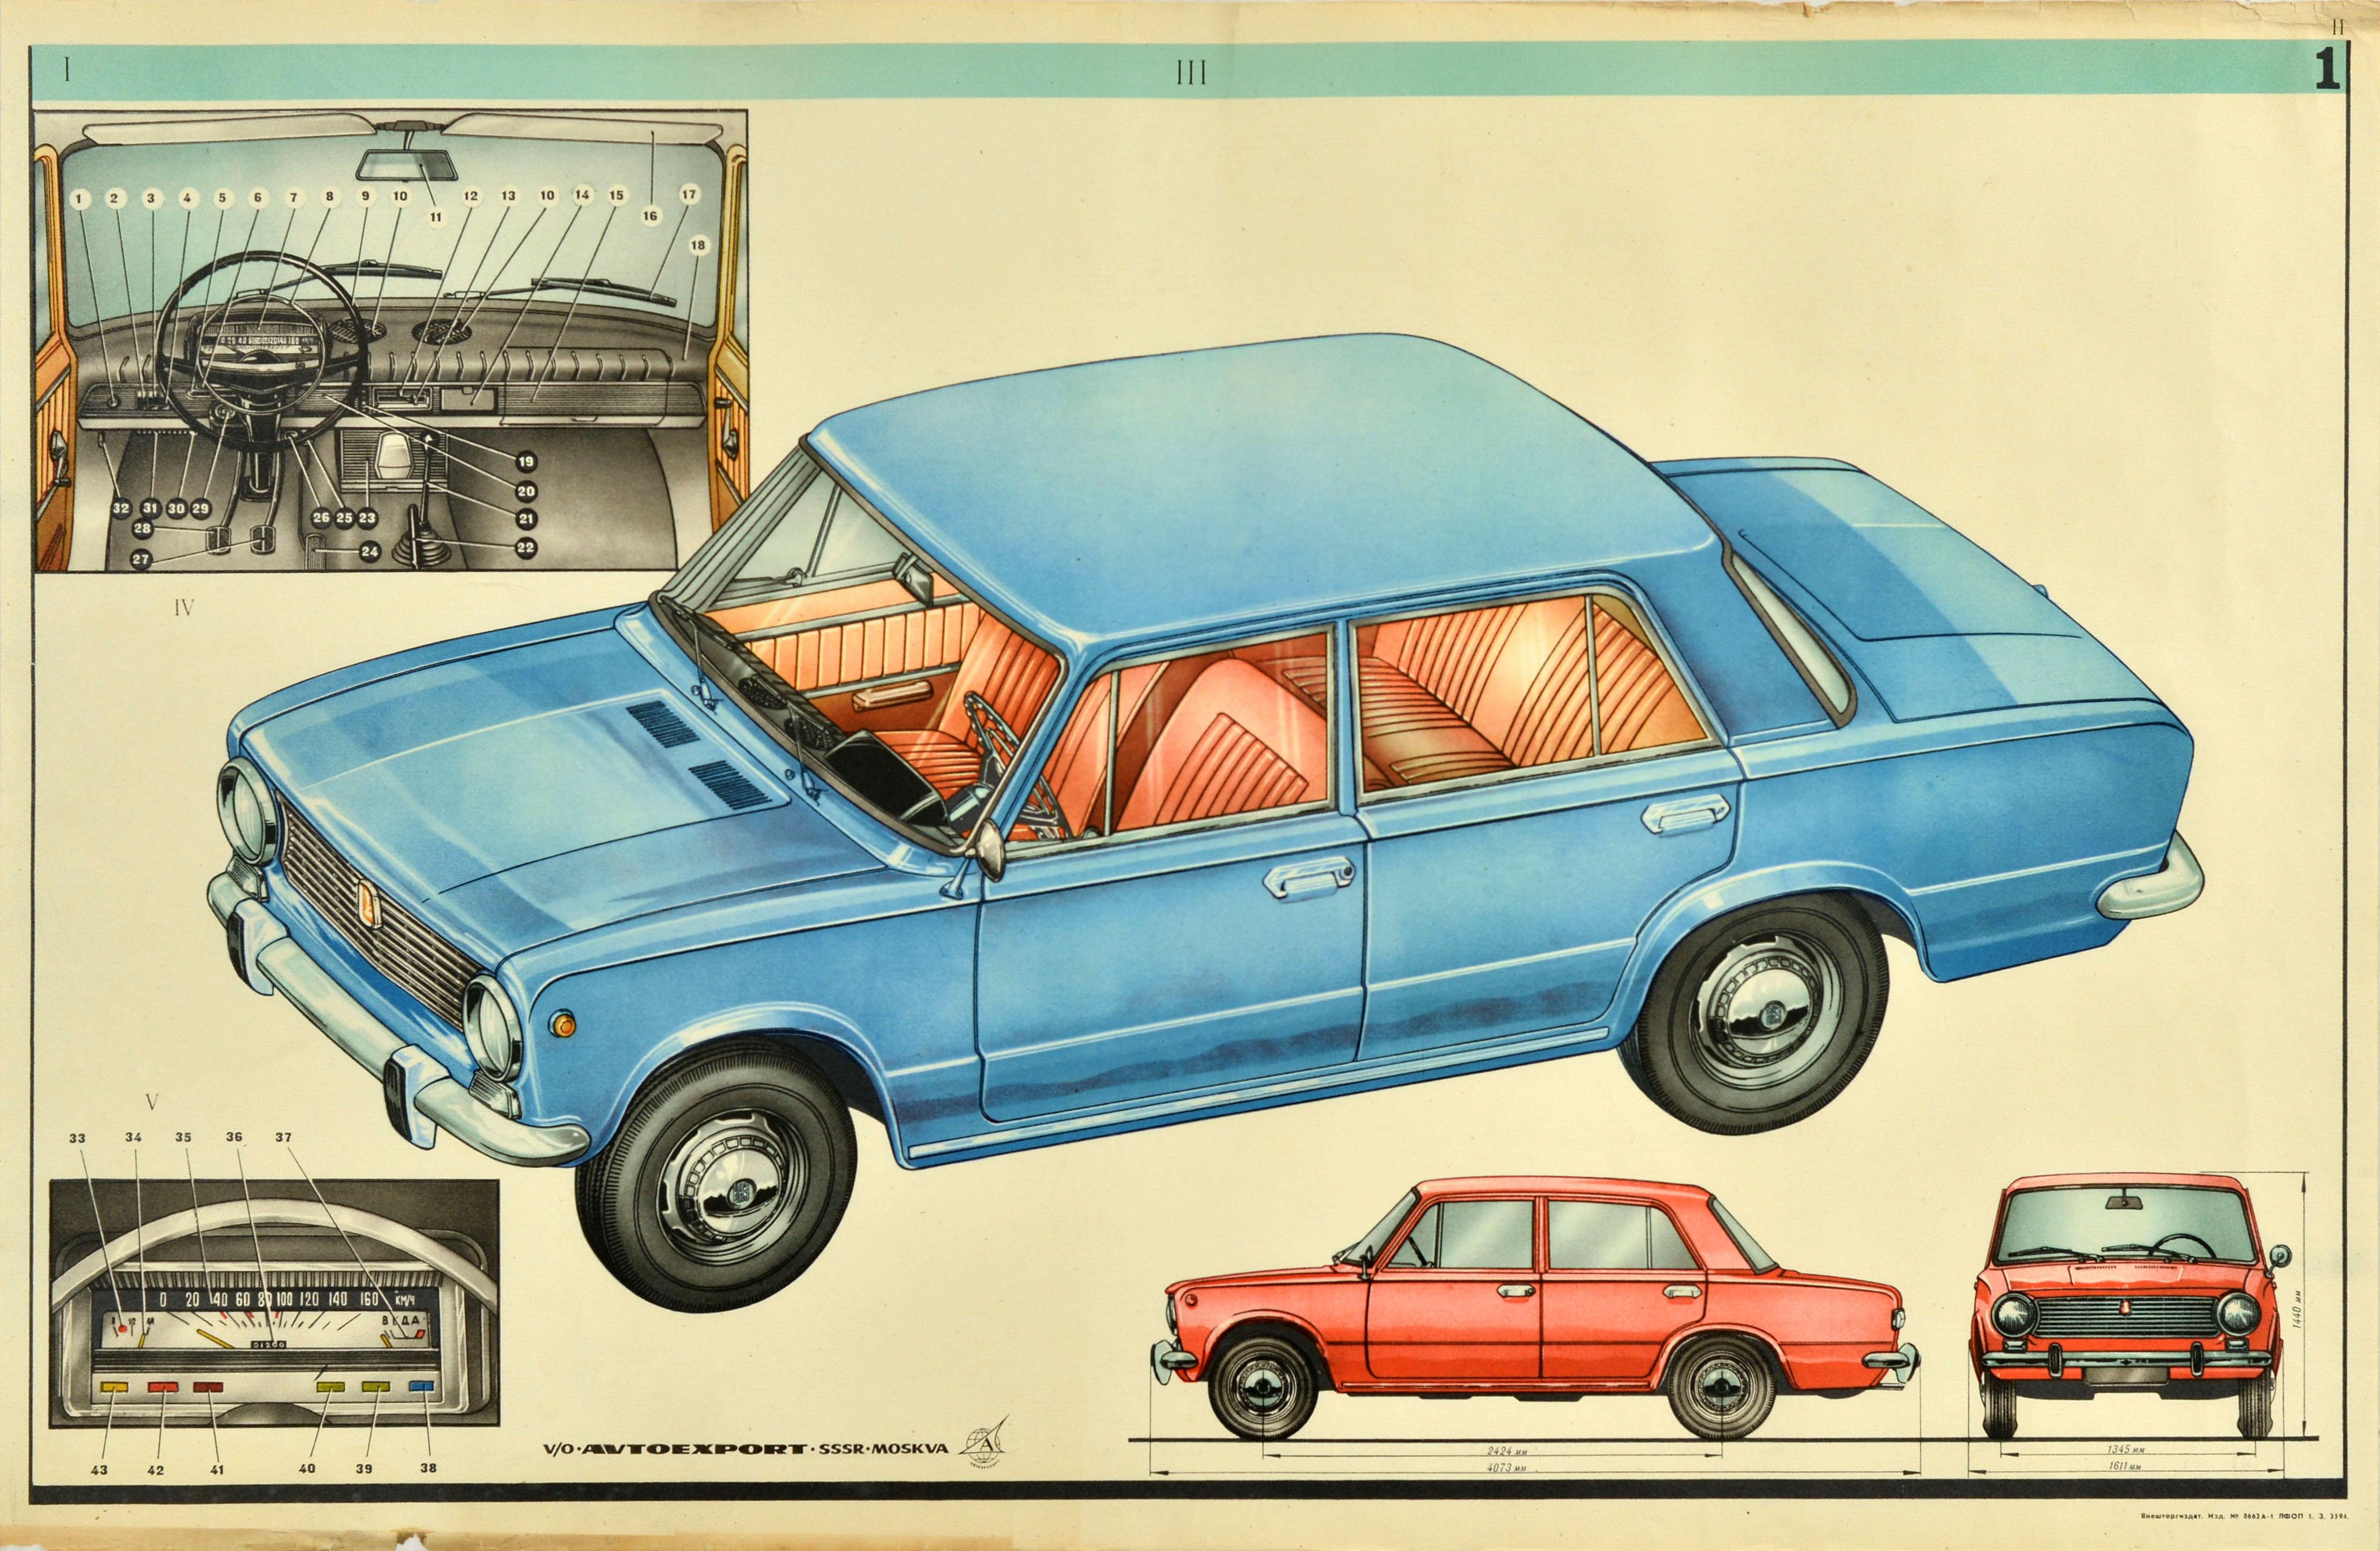 Unknown Print - Original Vintage Soviet Car Advertising Poster Lada Car AvtoVAZ USSR Moscow